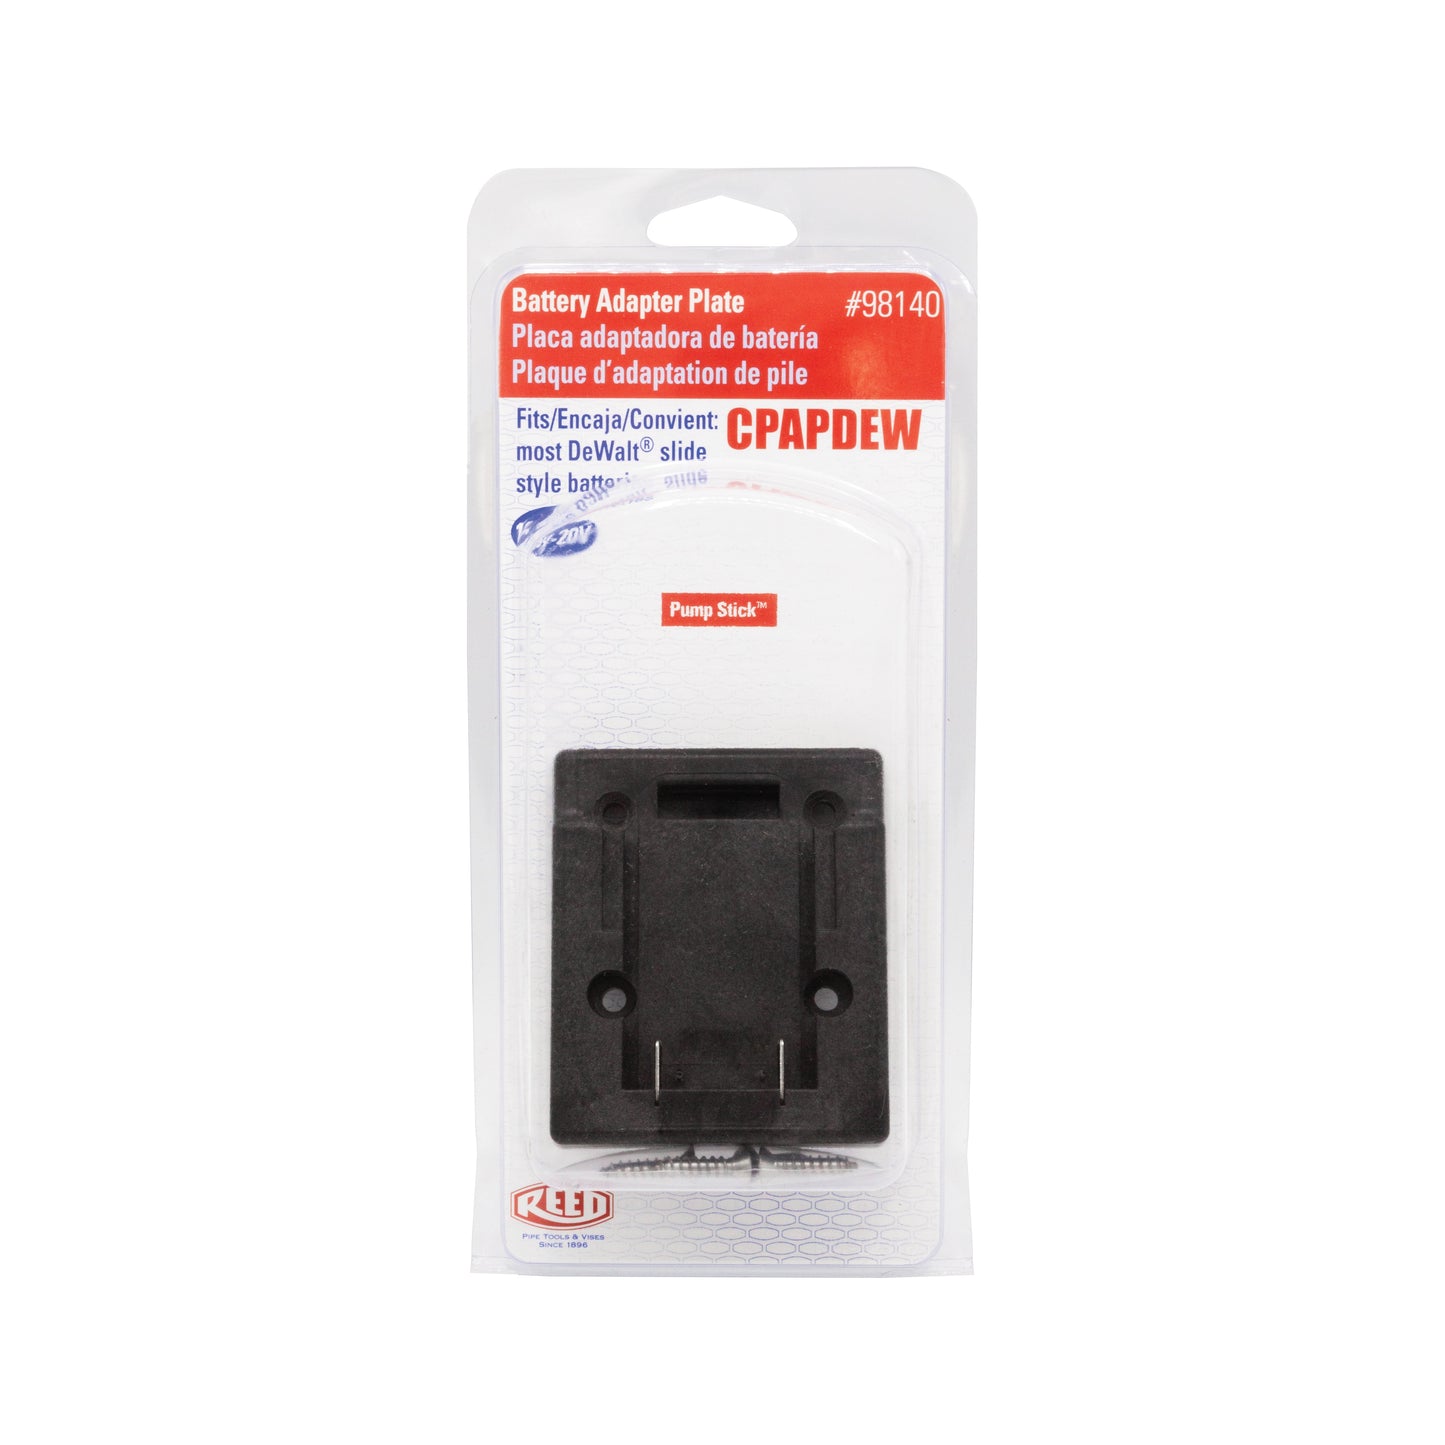 CPAPDEW - Pump Stick Battery Adapter Plate for DeWalt Batteries